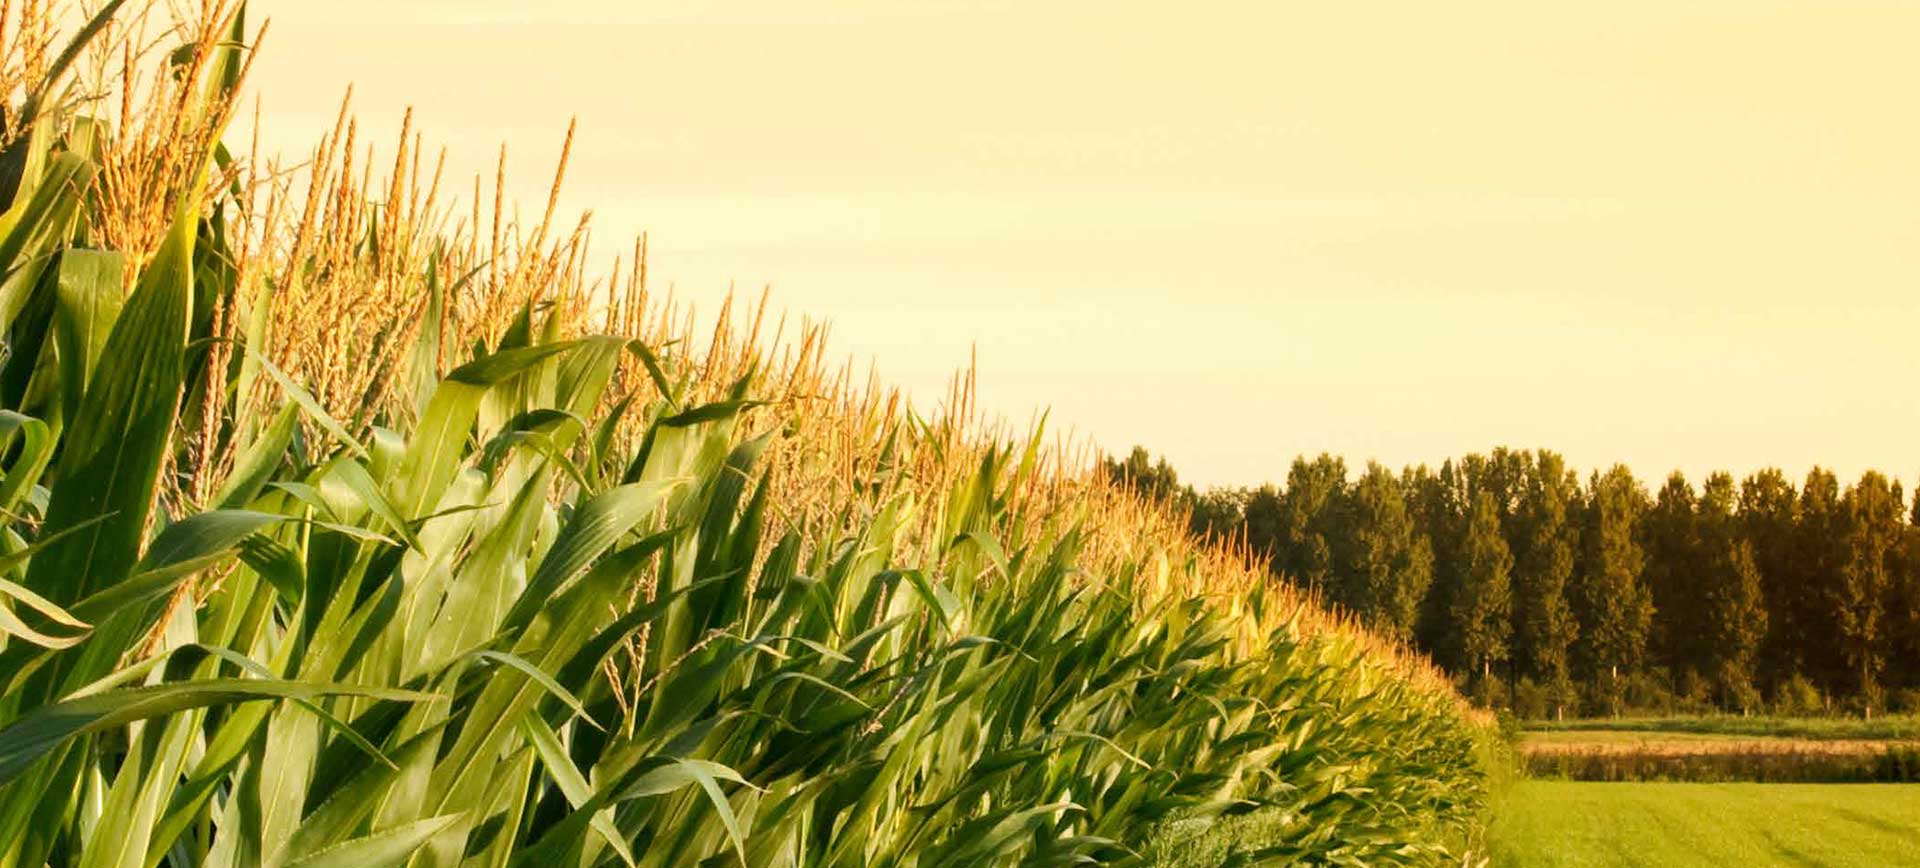 Corn Field - Intelinair case study